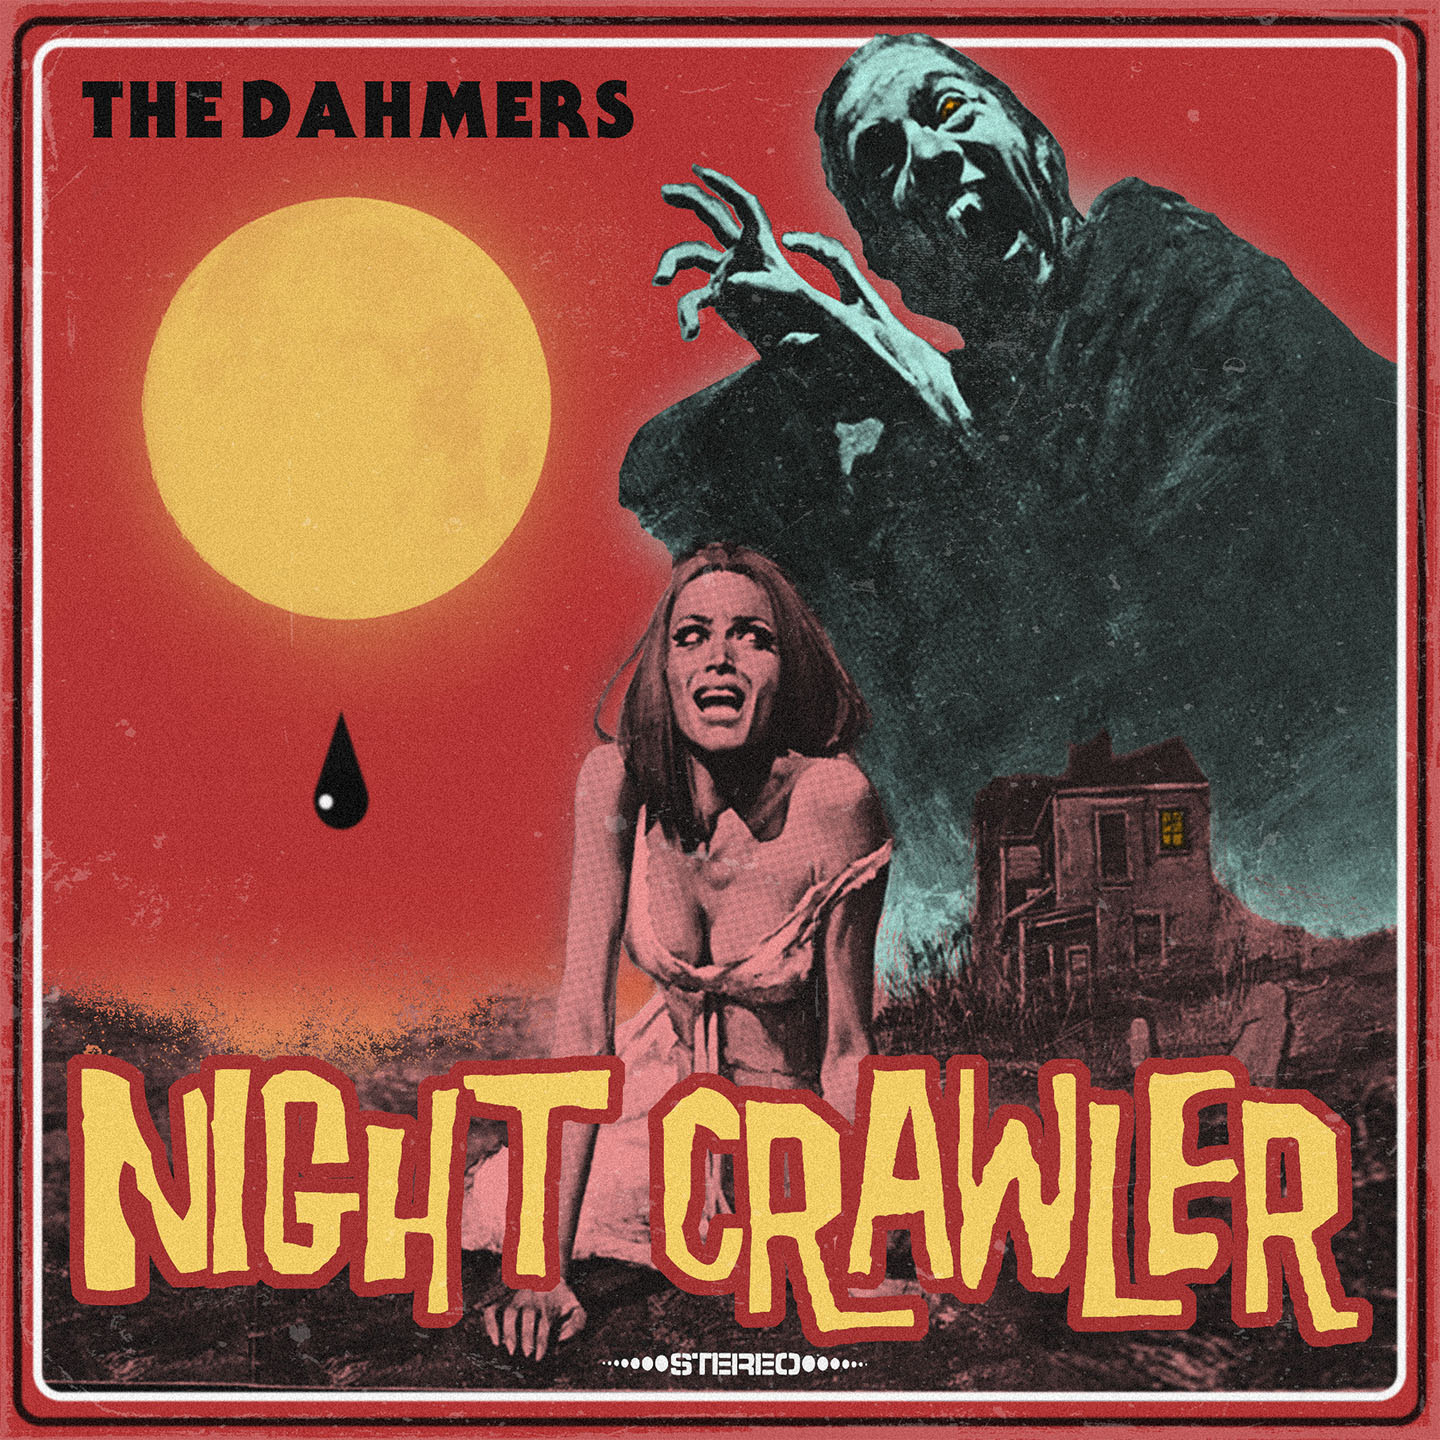 The Dahmers – “Night Crawler”